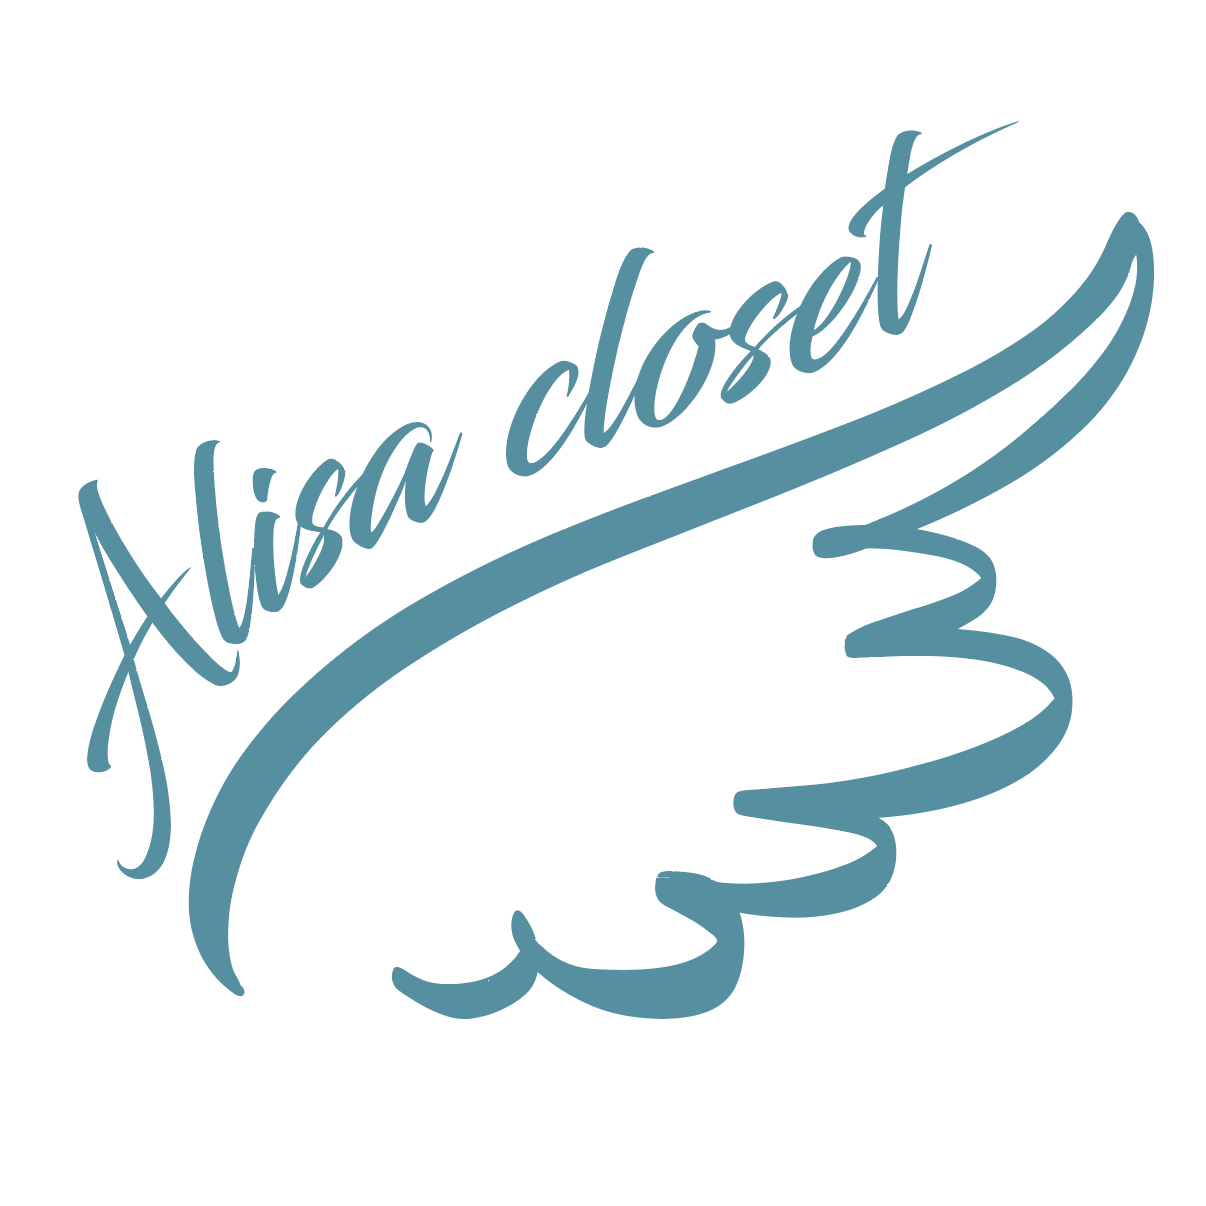 Alisa Closet